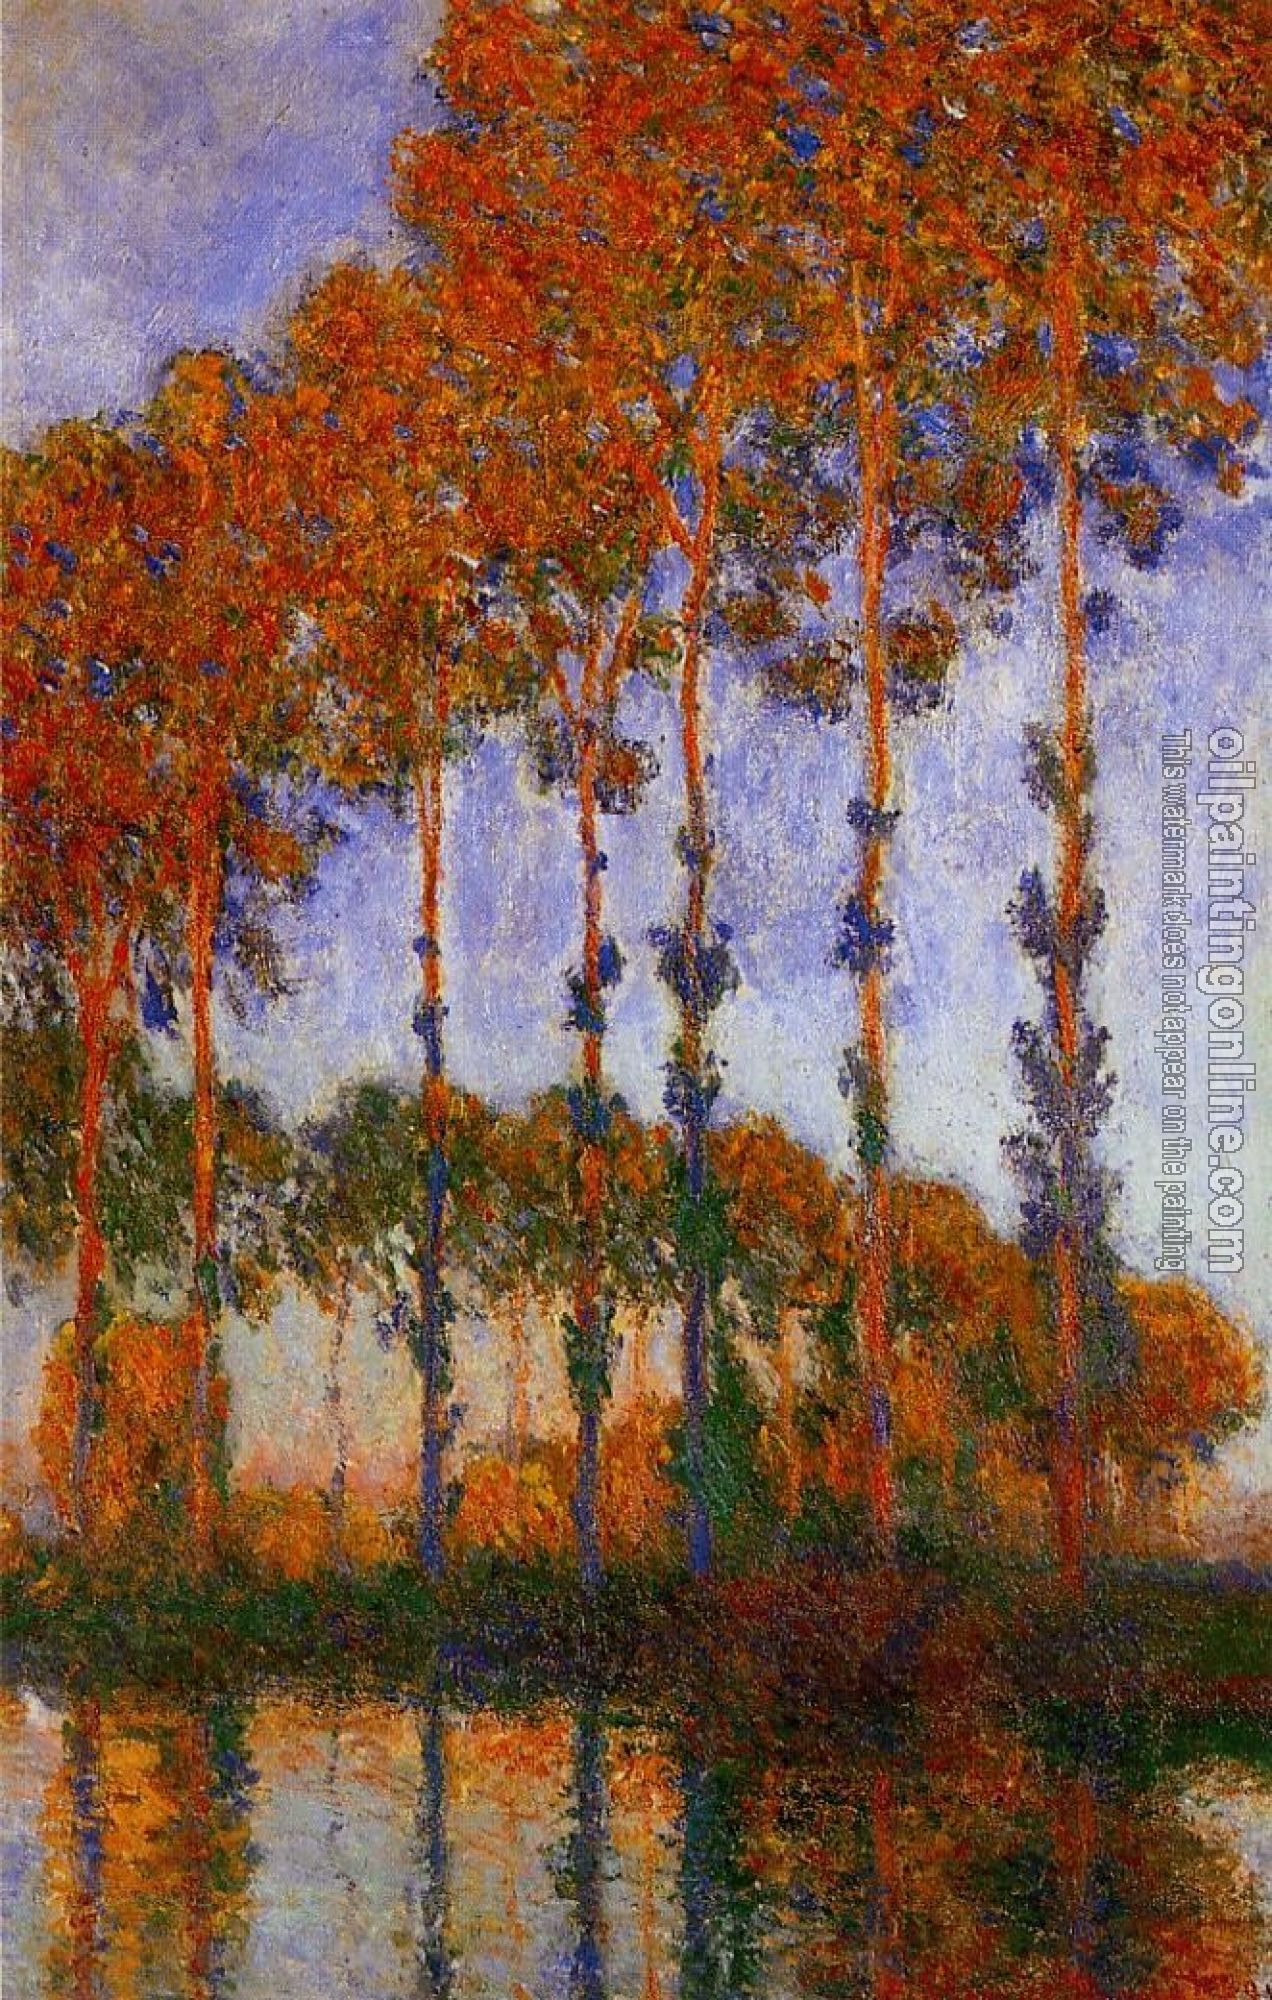 Monet, Claude Oscar - Poplars on the Banks of the River Epte, Sunset